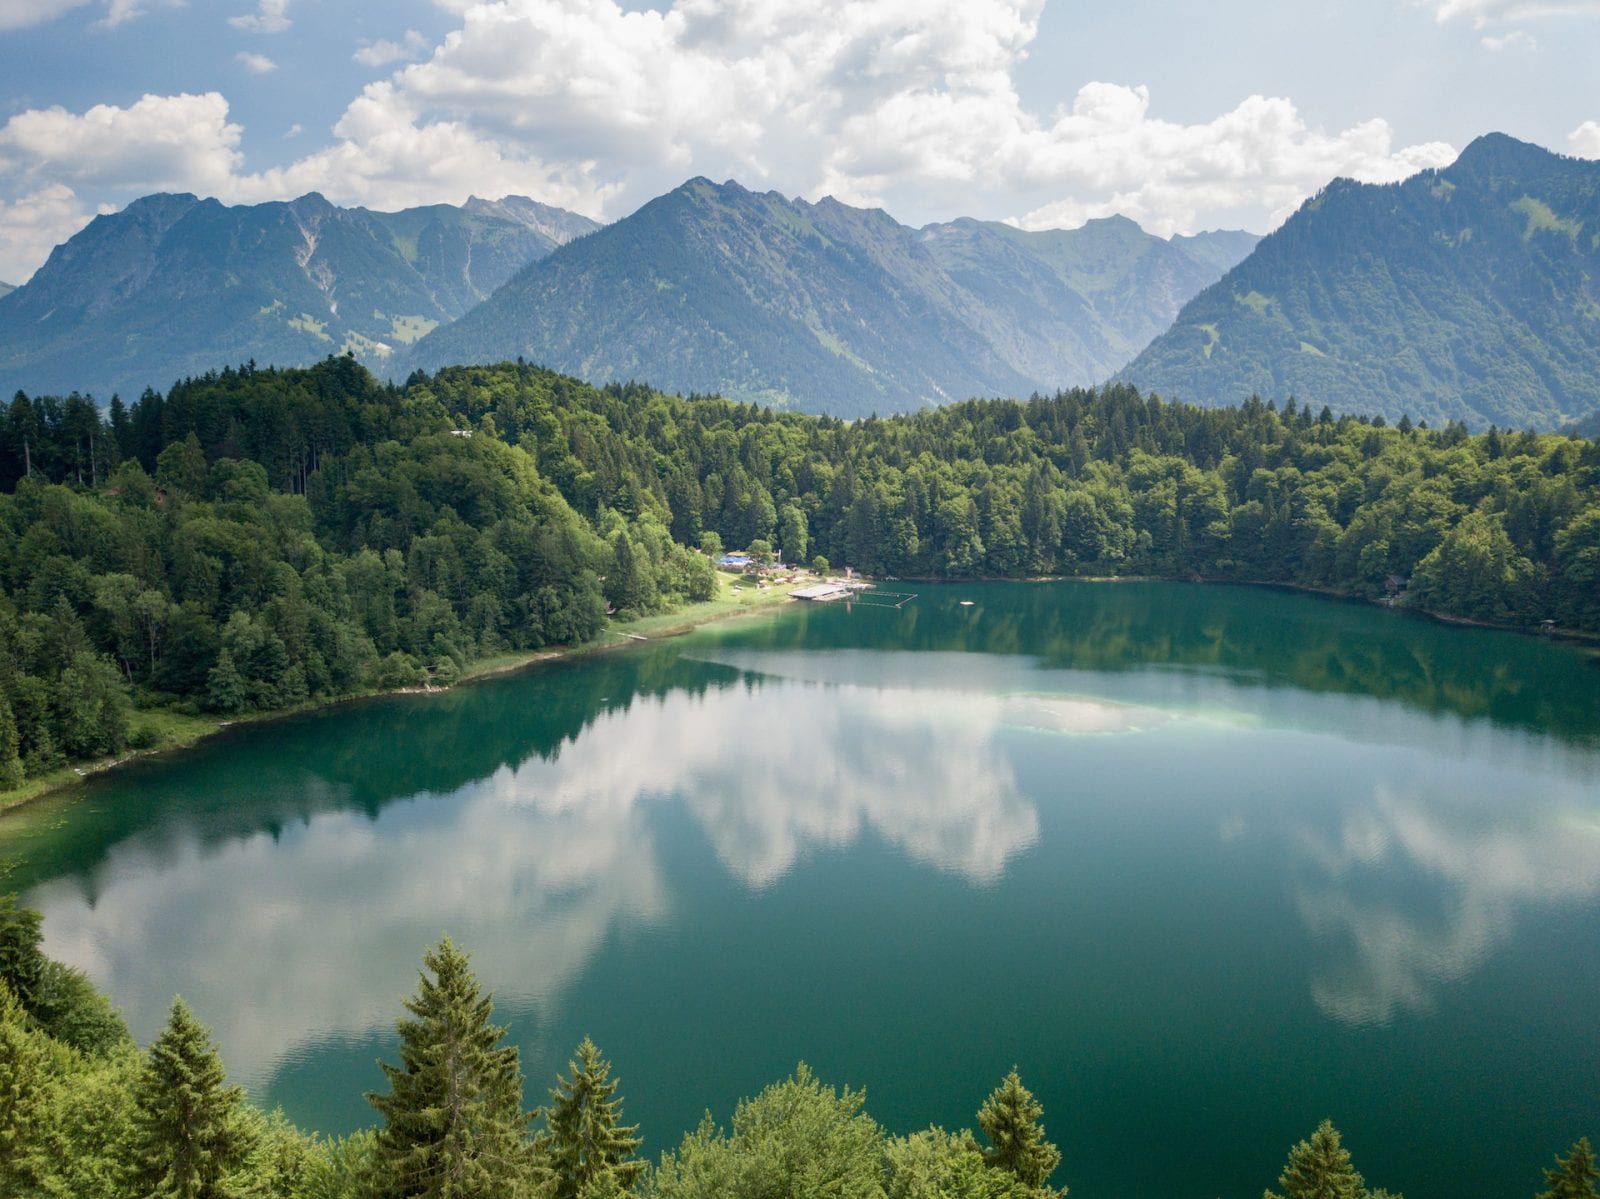 image of lake and mountains